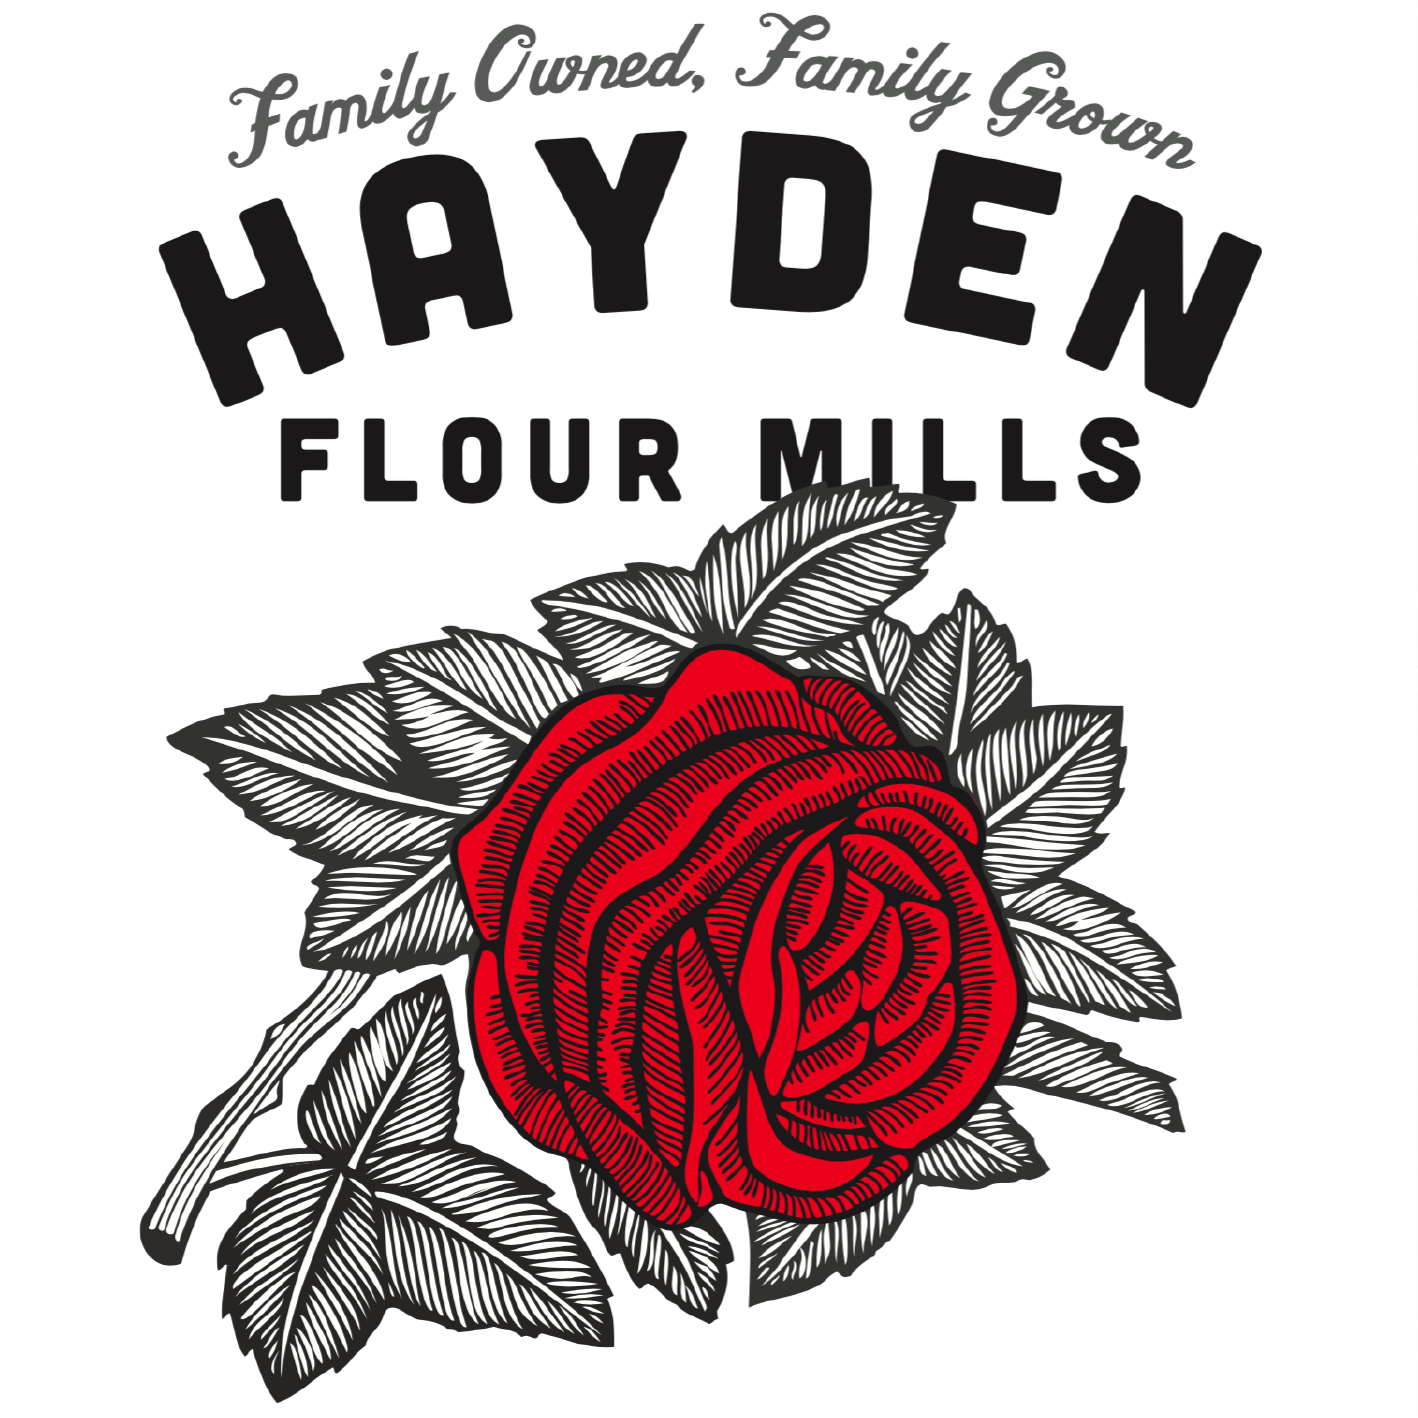 Hayden Flour Mills Logo